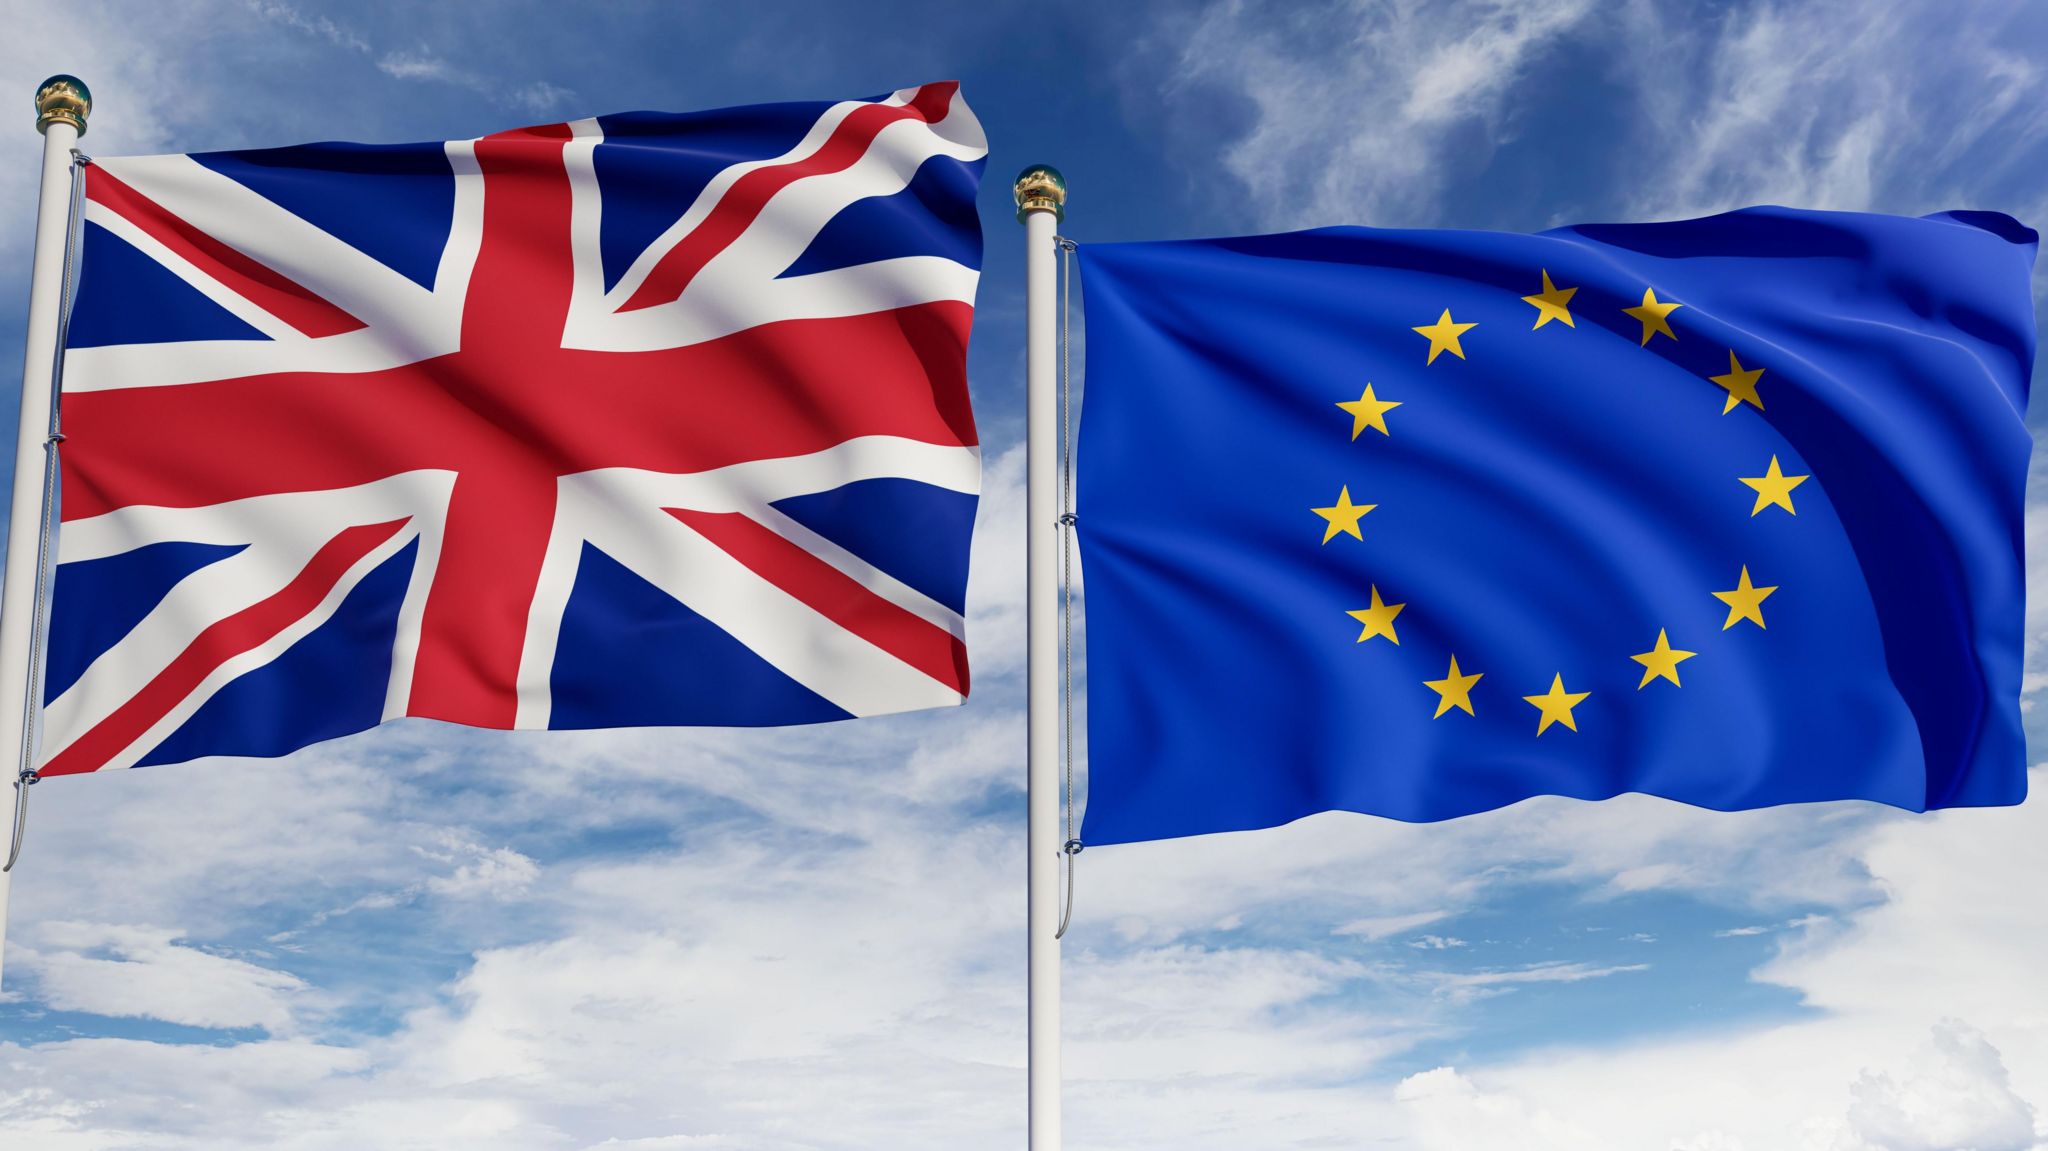 The UK flag and the EU flag